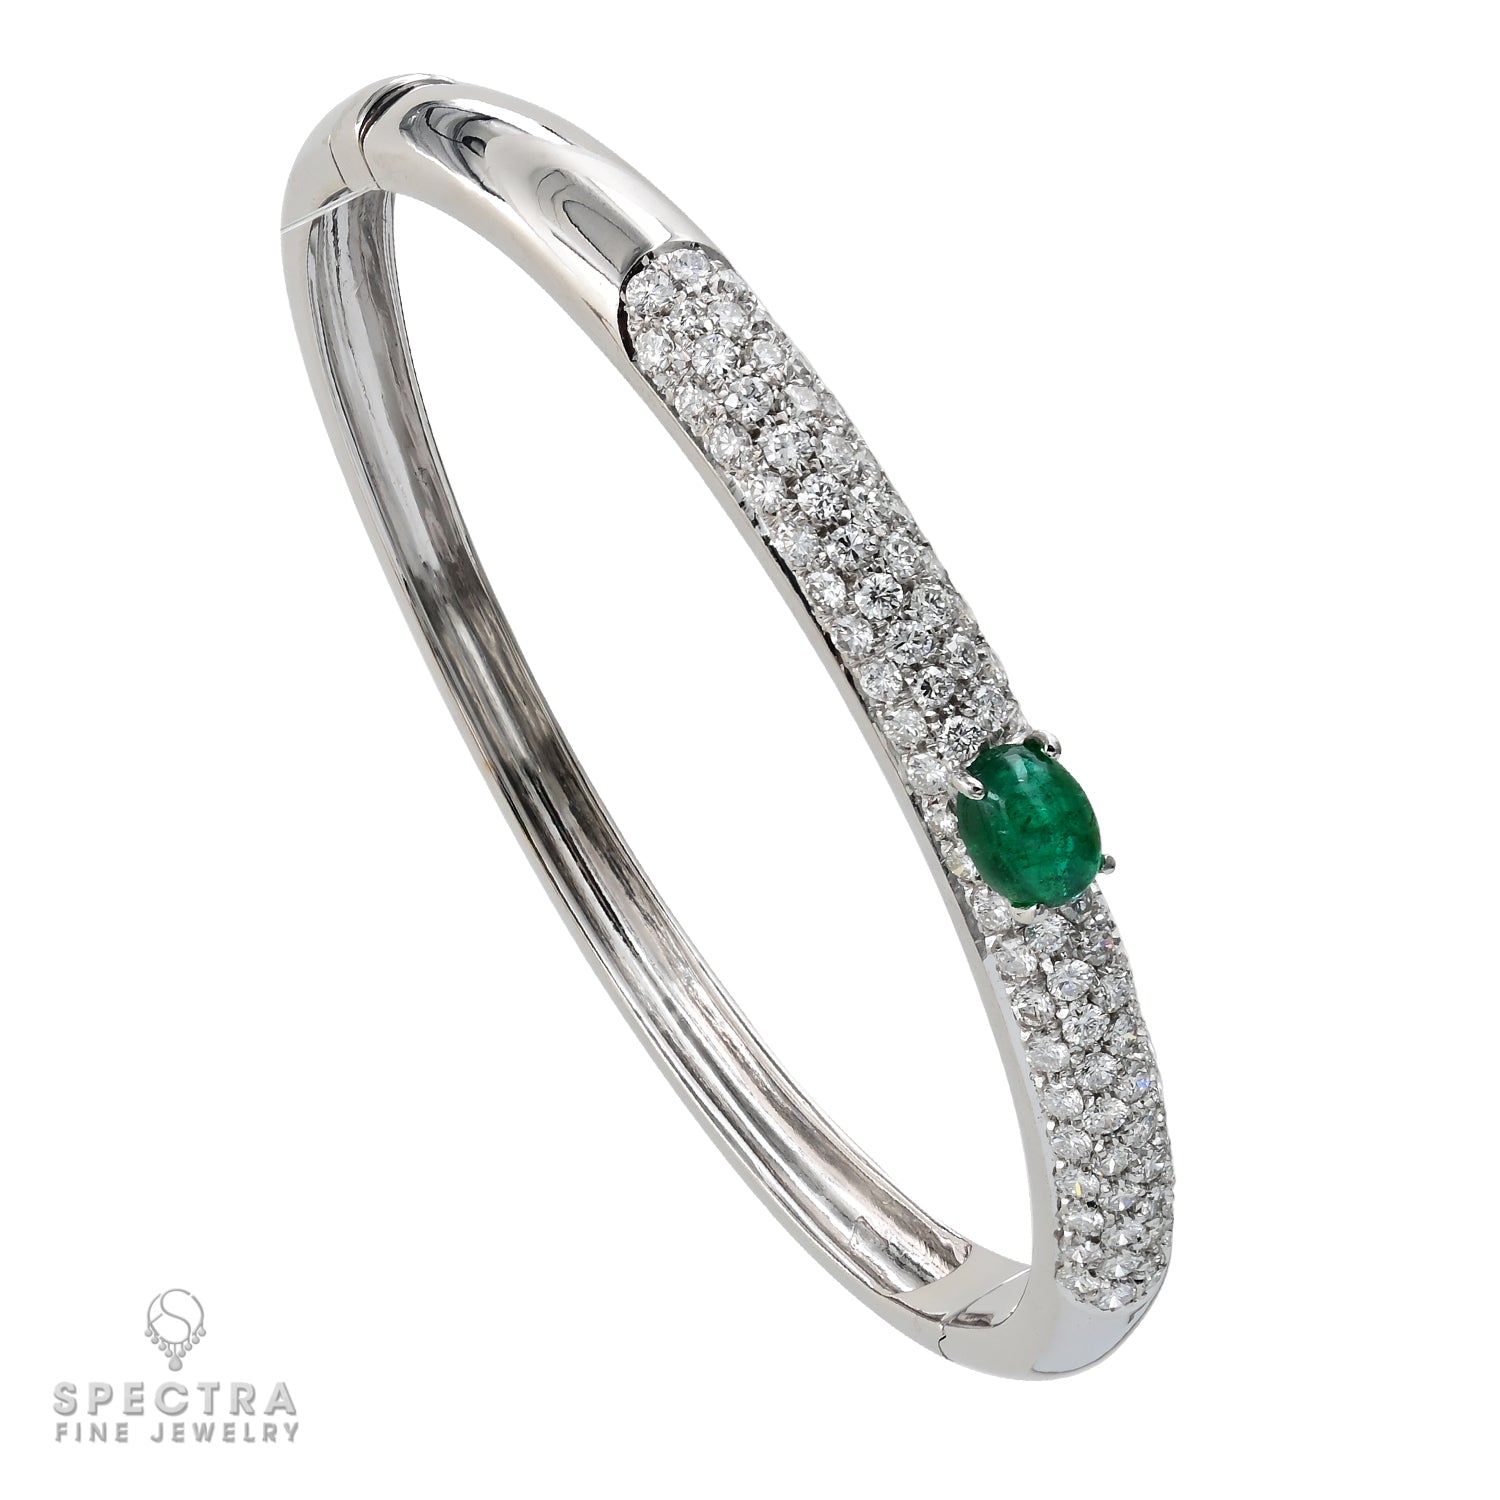 Modern Elegance: Pave Bombe Bangle with Oval Emeralds